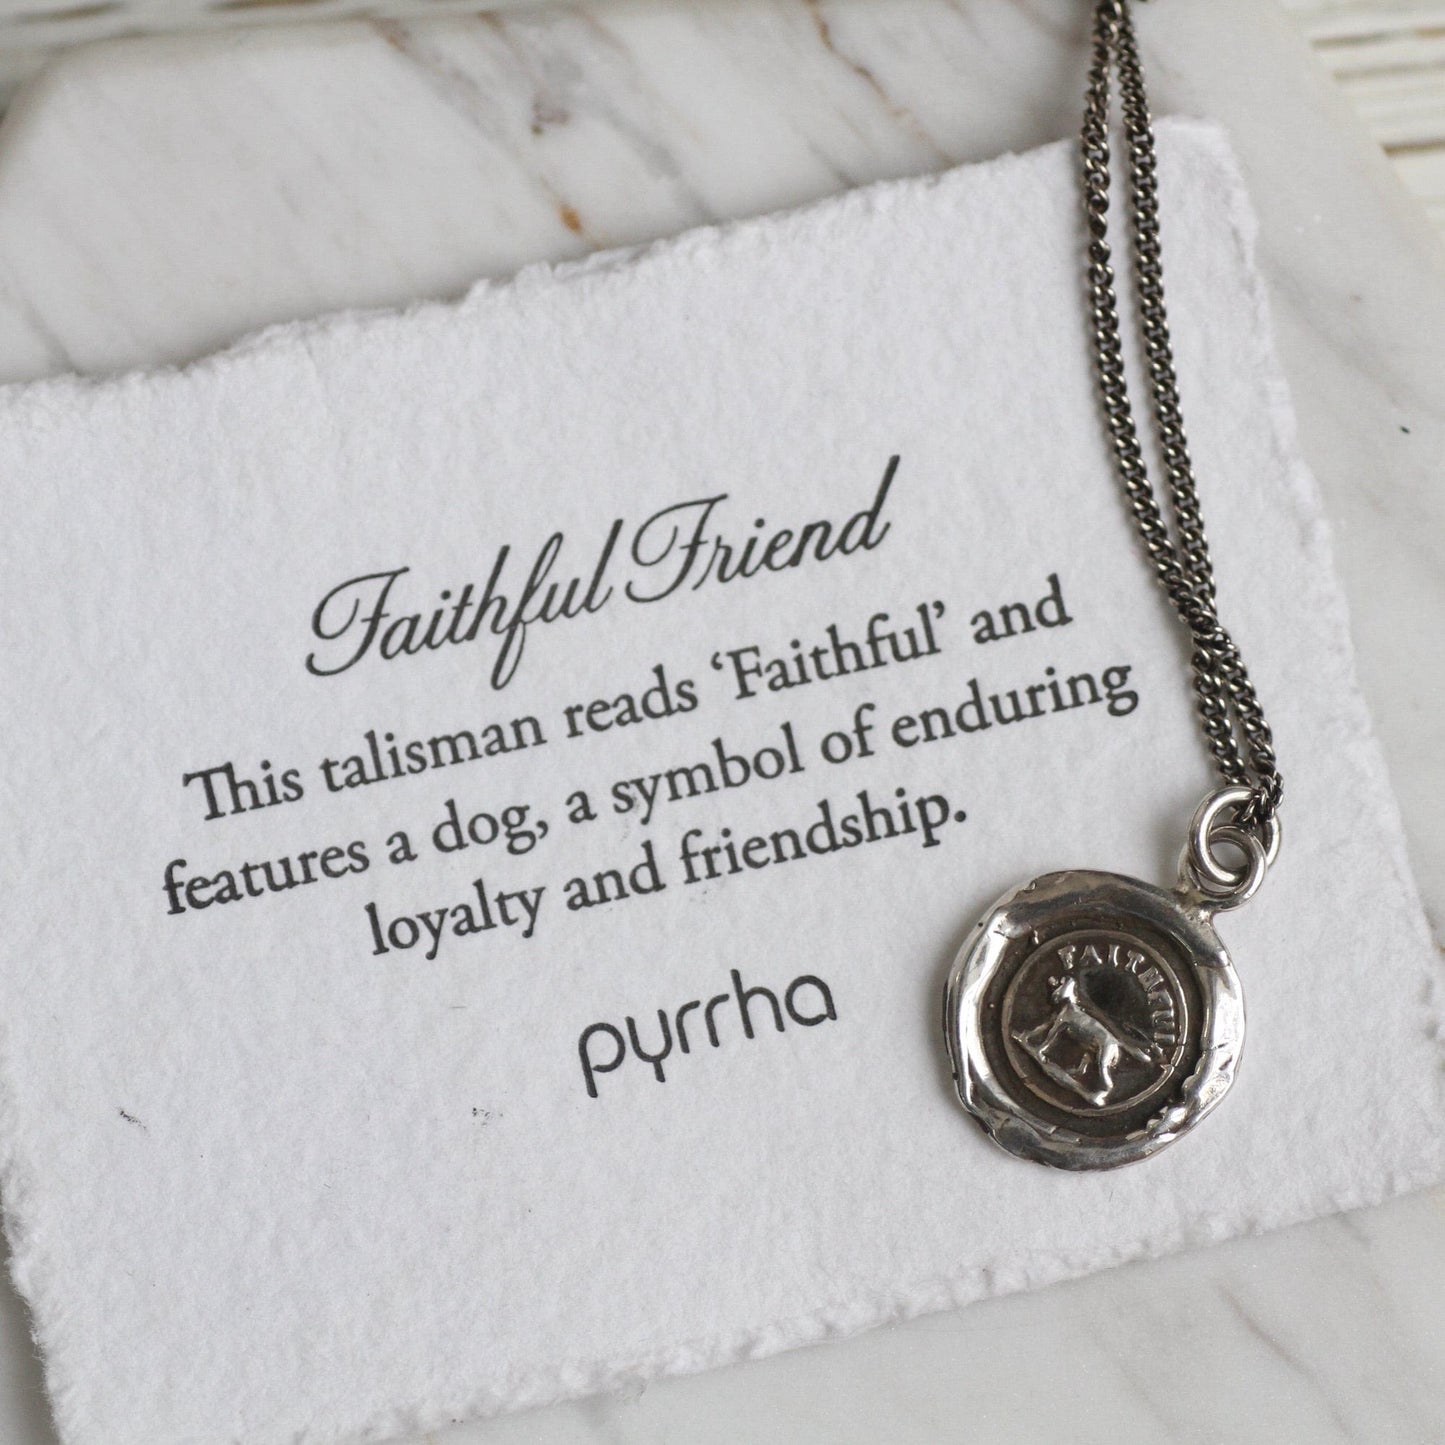 NKL Faithful Friend Talisman Necklace